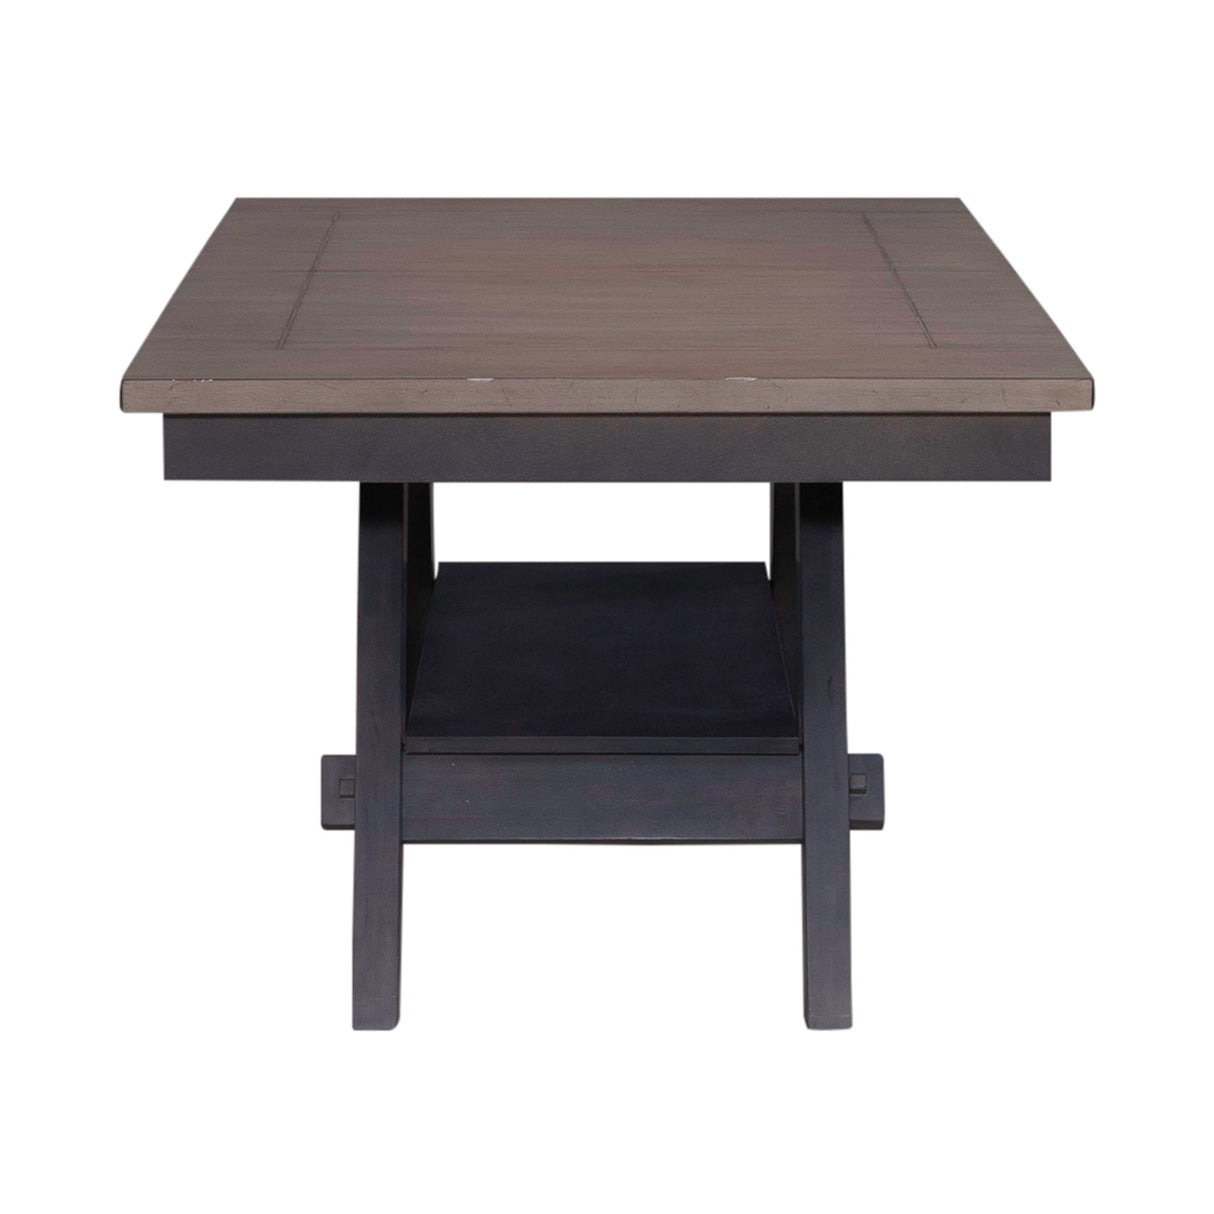 Lawson - Pedestal Table Set - Dark Gray